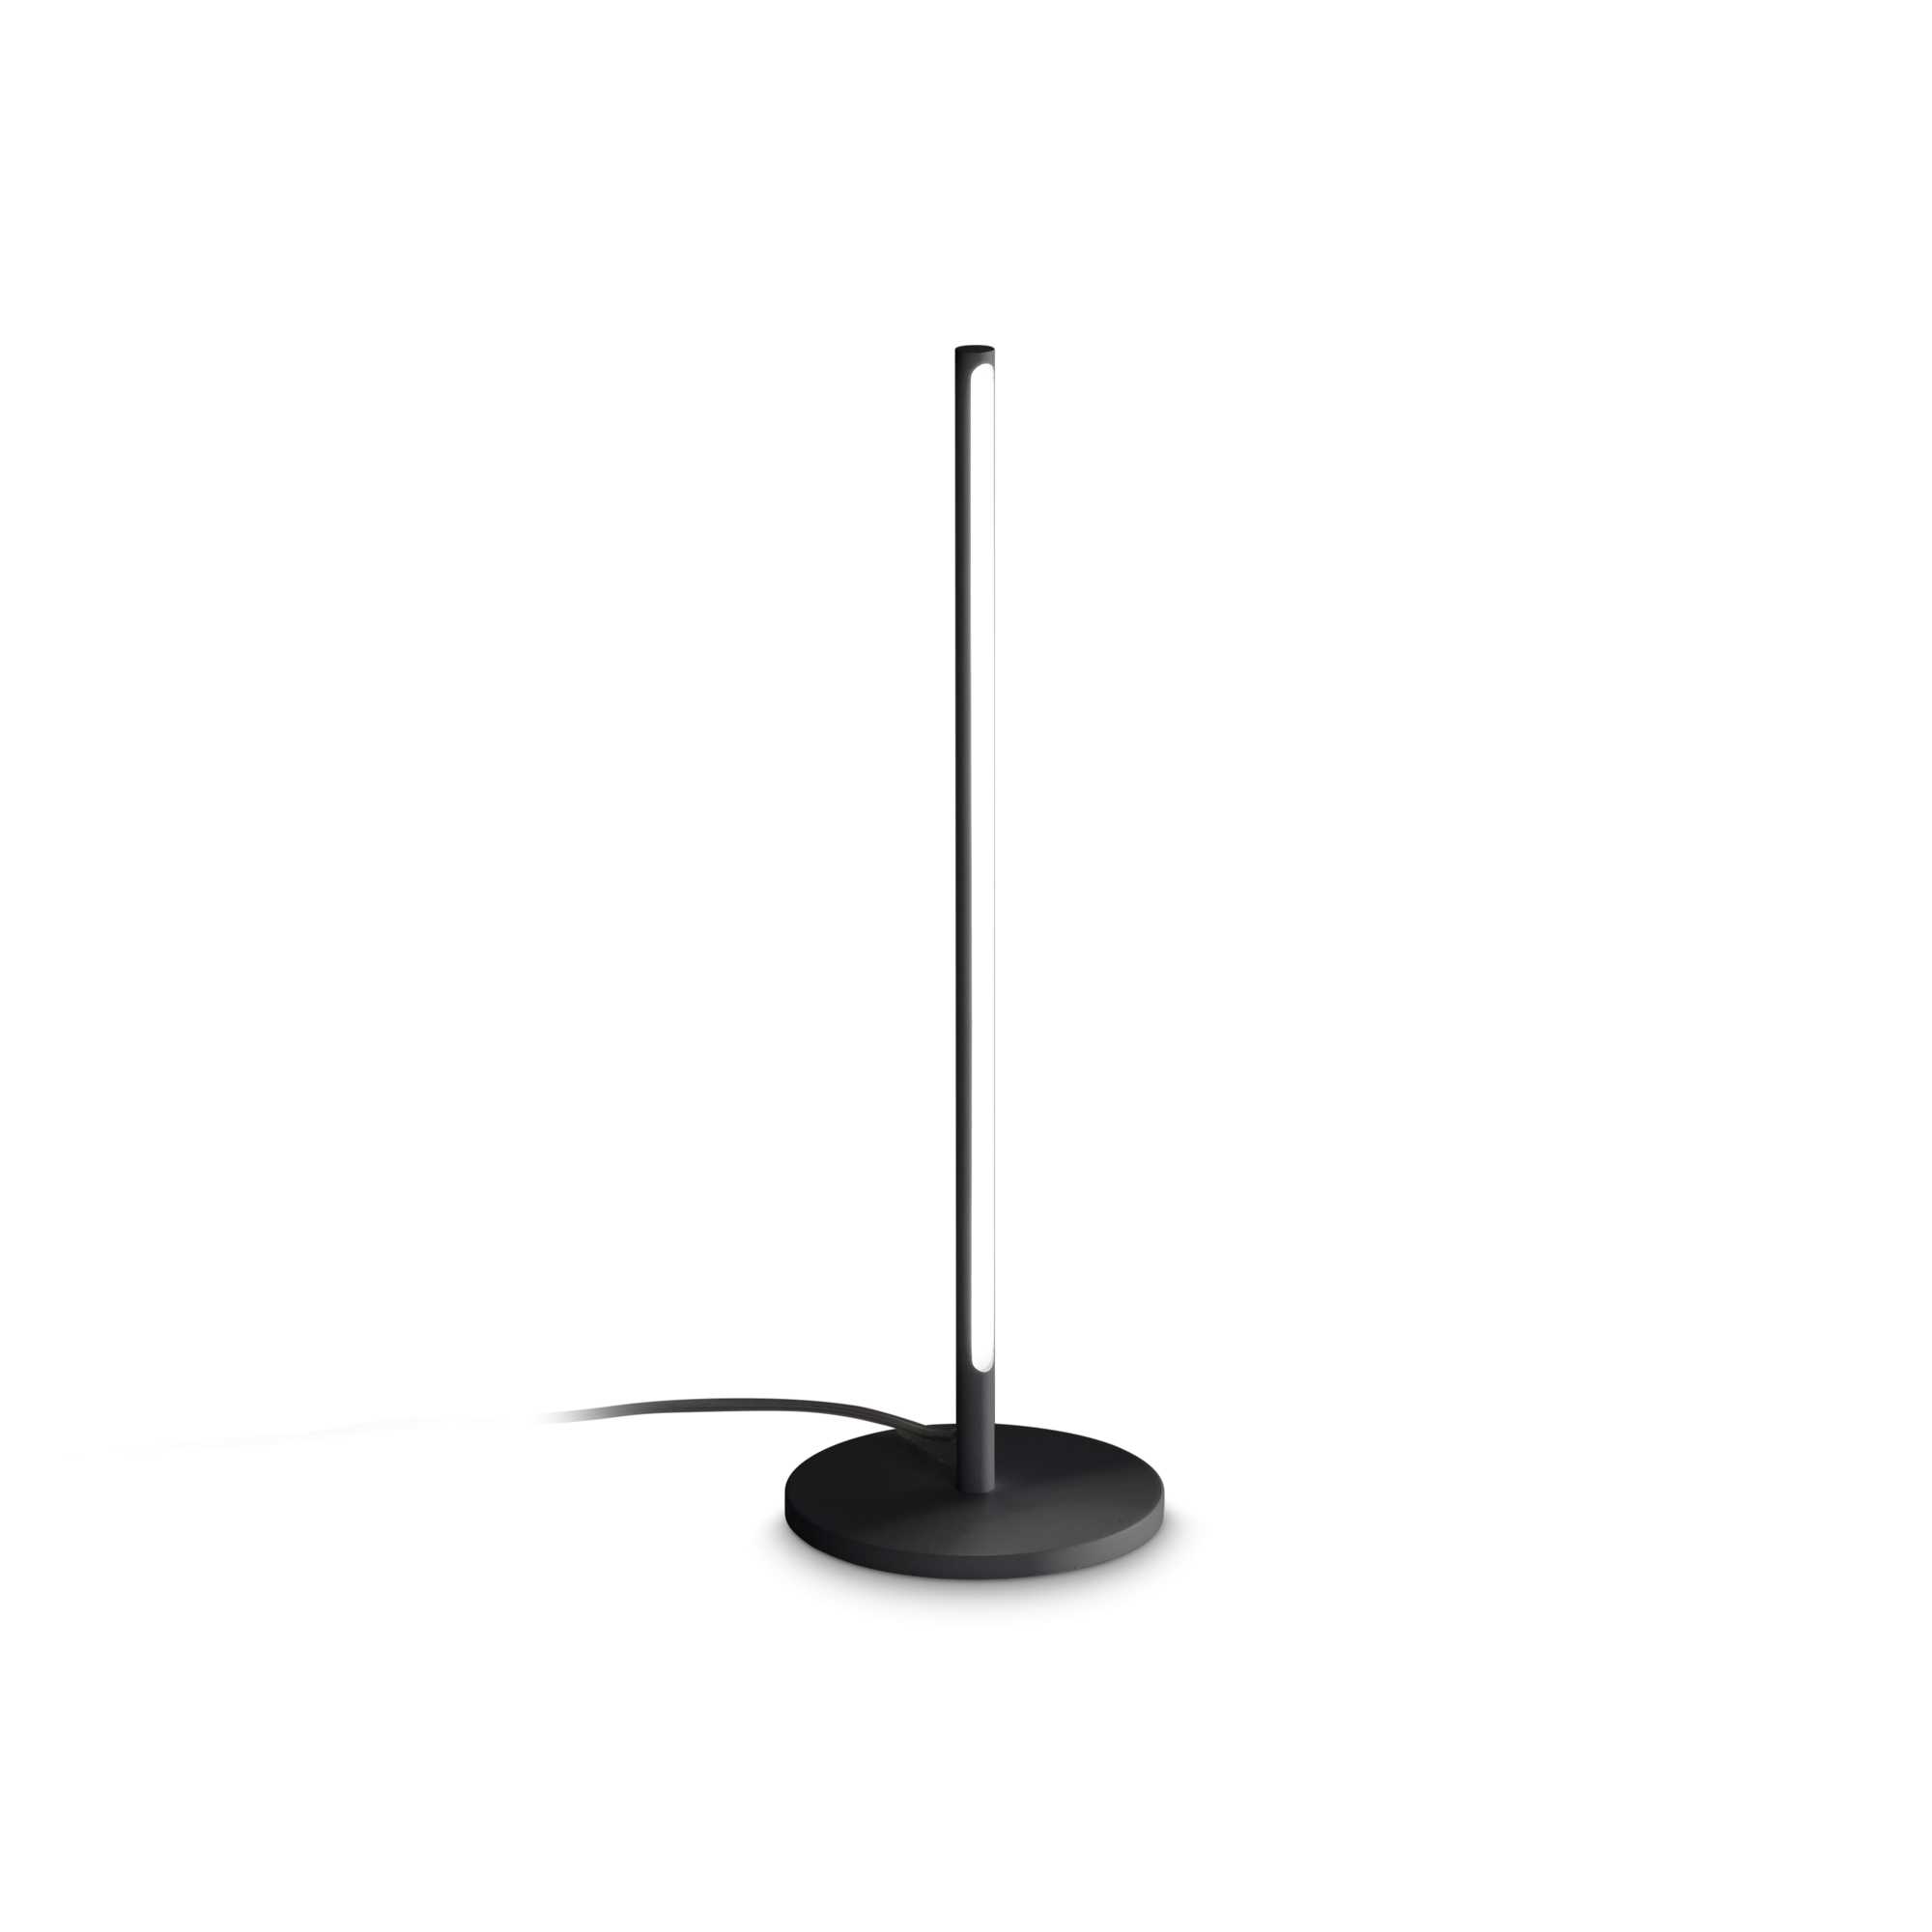 AD hotelska oprema Stolna lampa Filo tl- Crne boje slika proizvoda